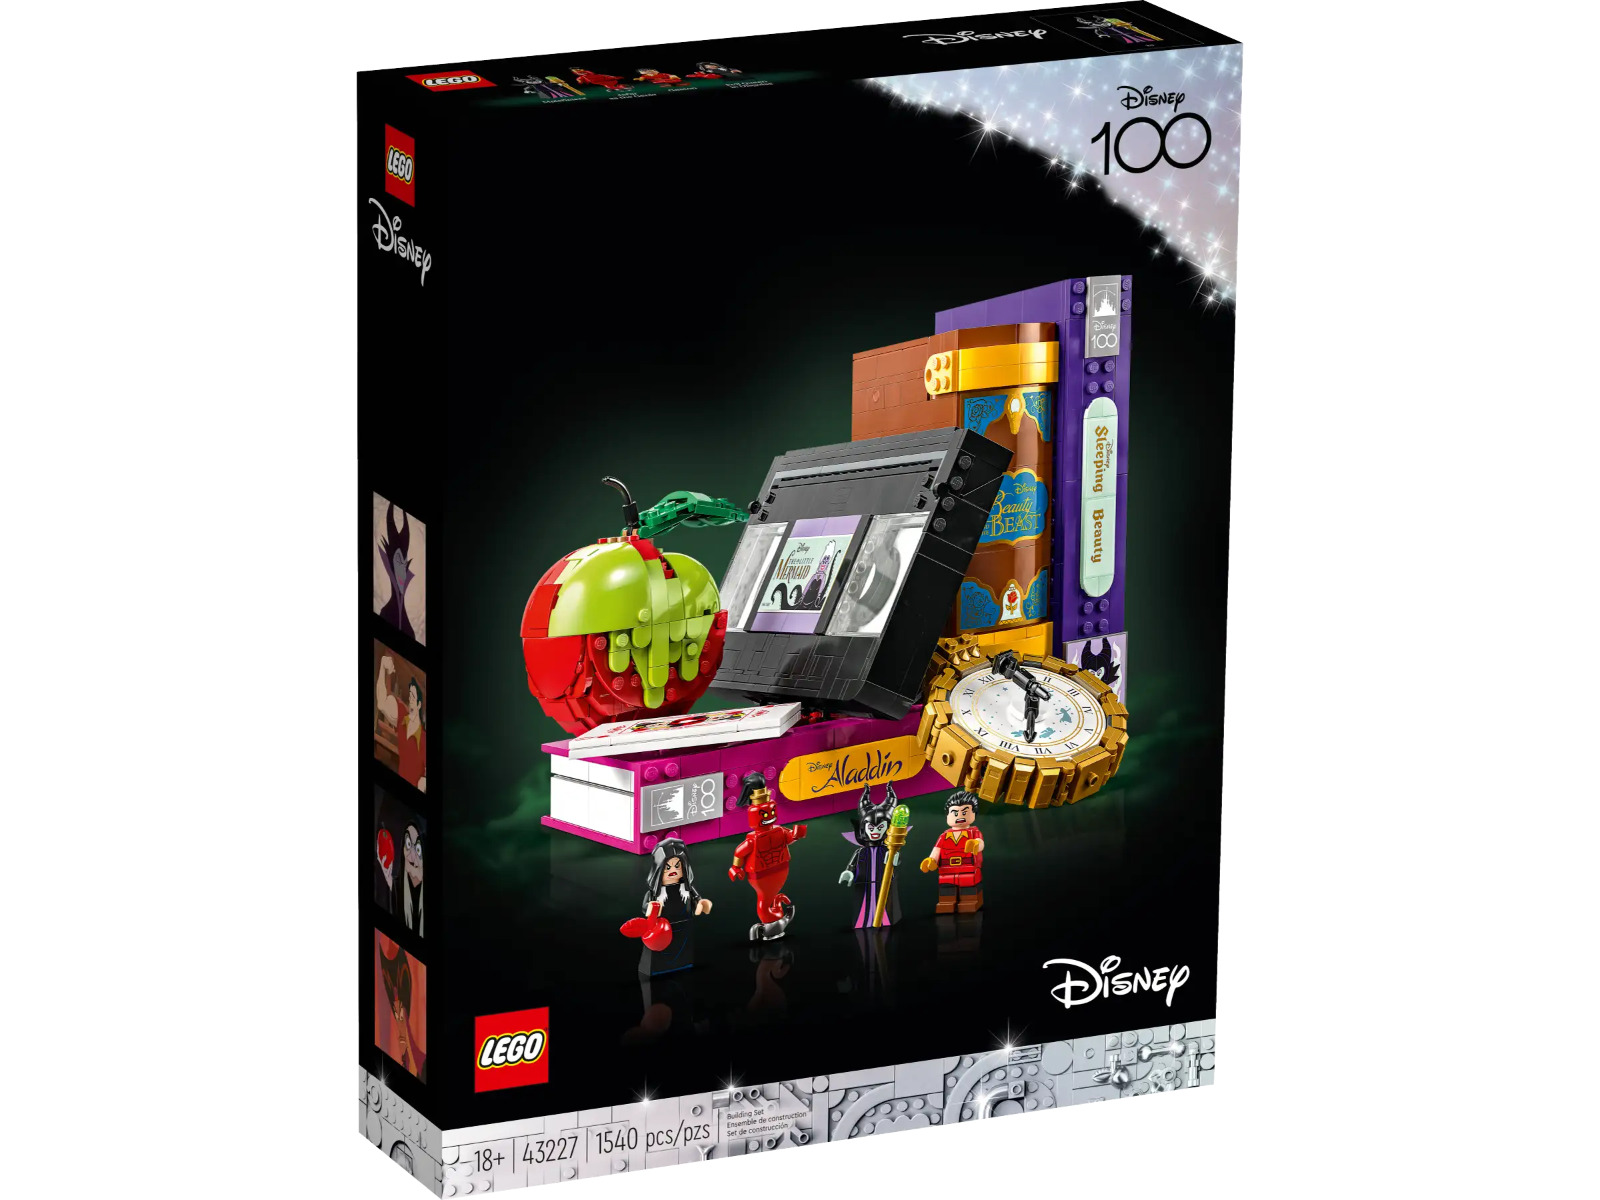 LEGO Disney 43227 Villian Icons New Factory Sealed